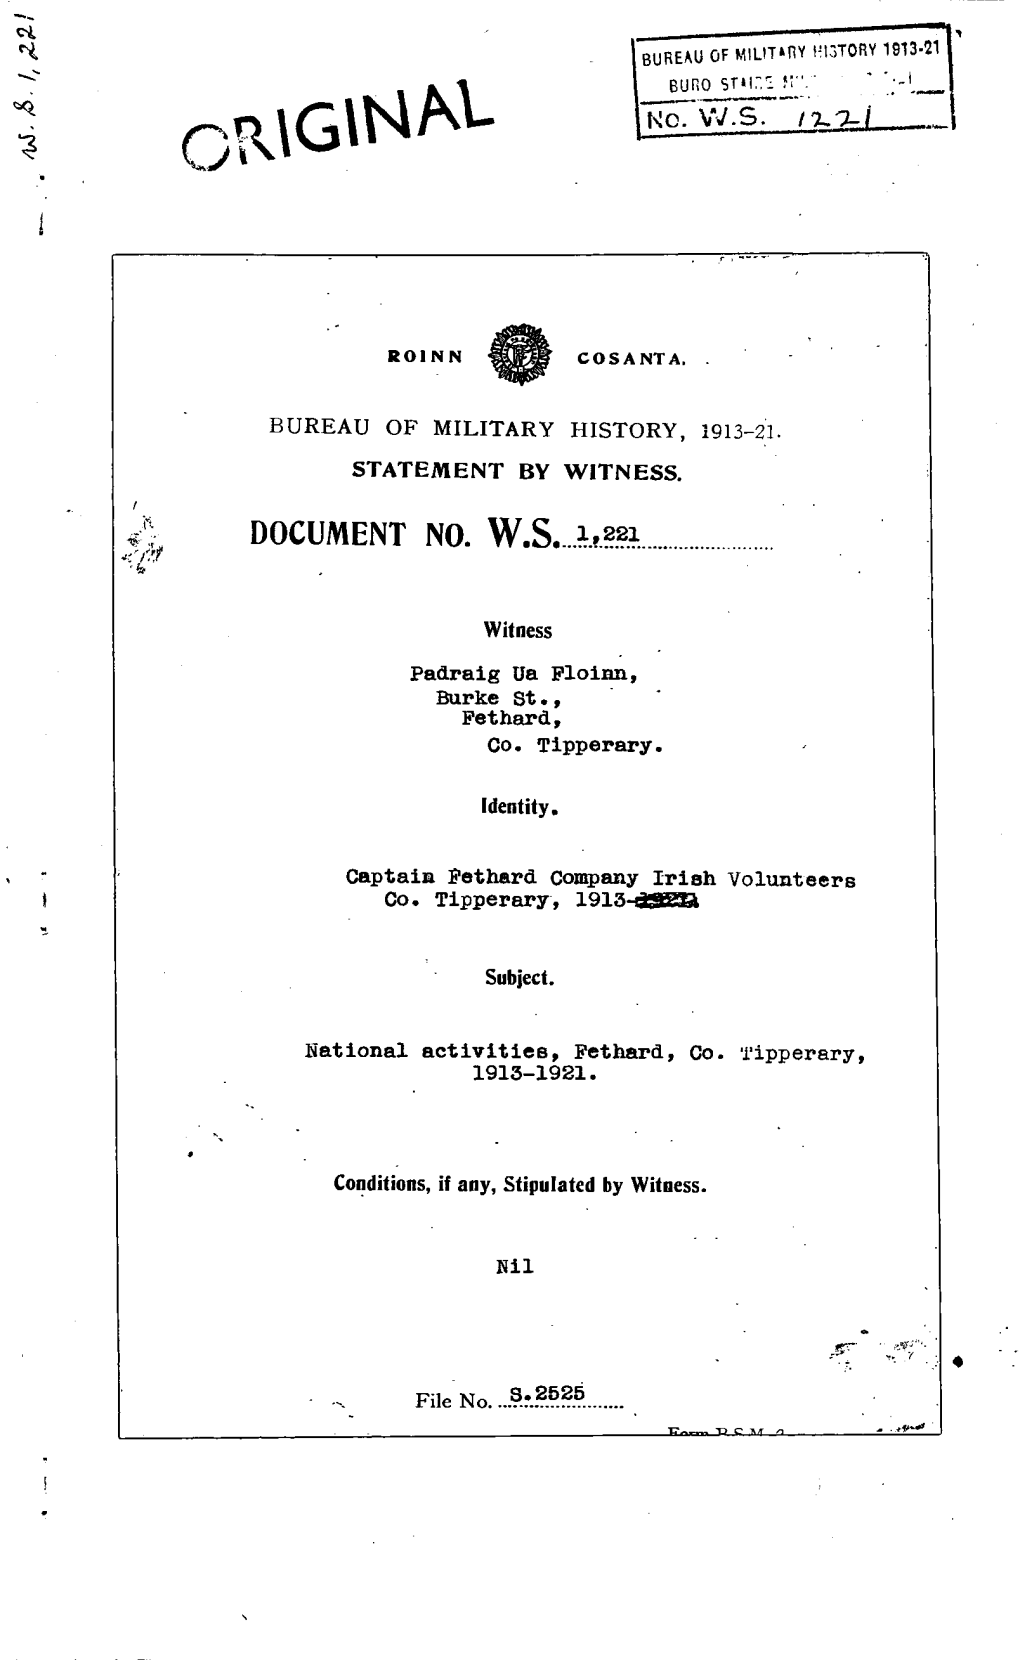 DOCUMENT NO. HISTORY, WITNESS. W.S. 1,221 1913-21. Witness Padraig Ua Floinn, Burke St., Fethard, Co. Tipperary. Identity. Capta